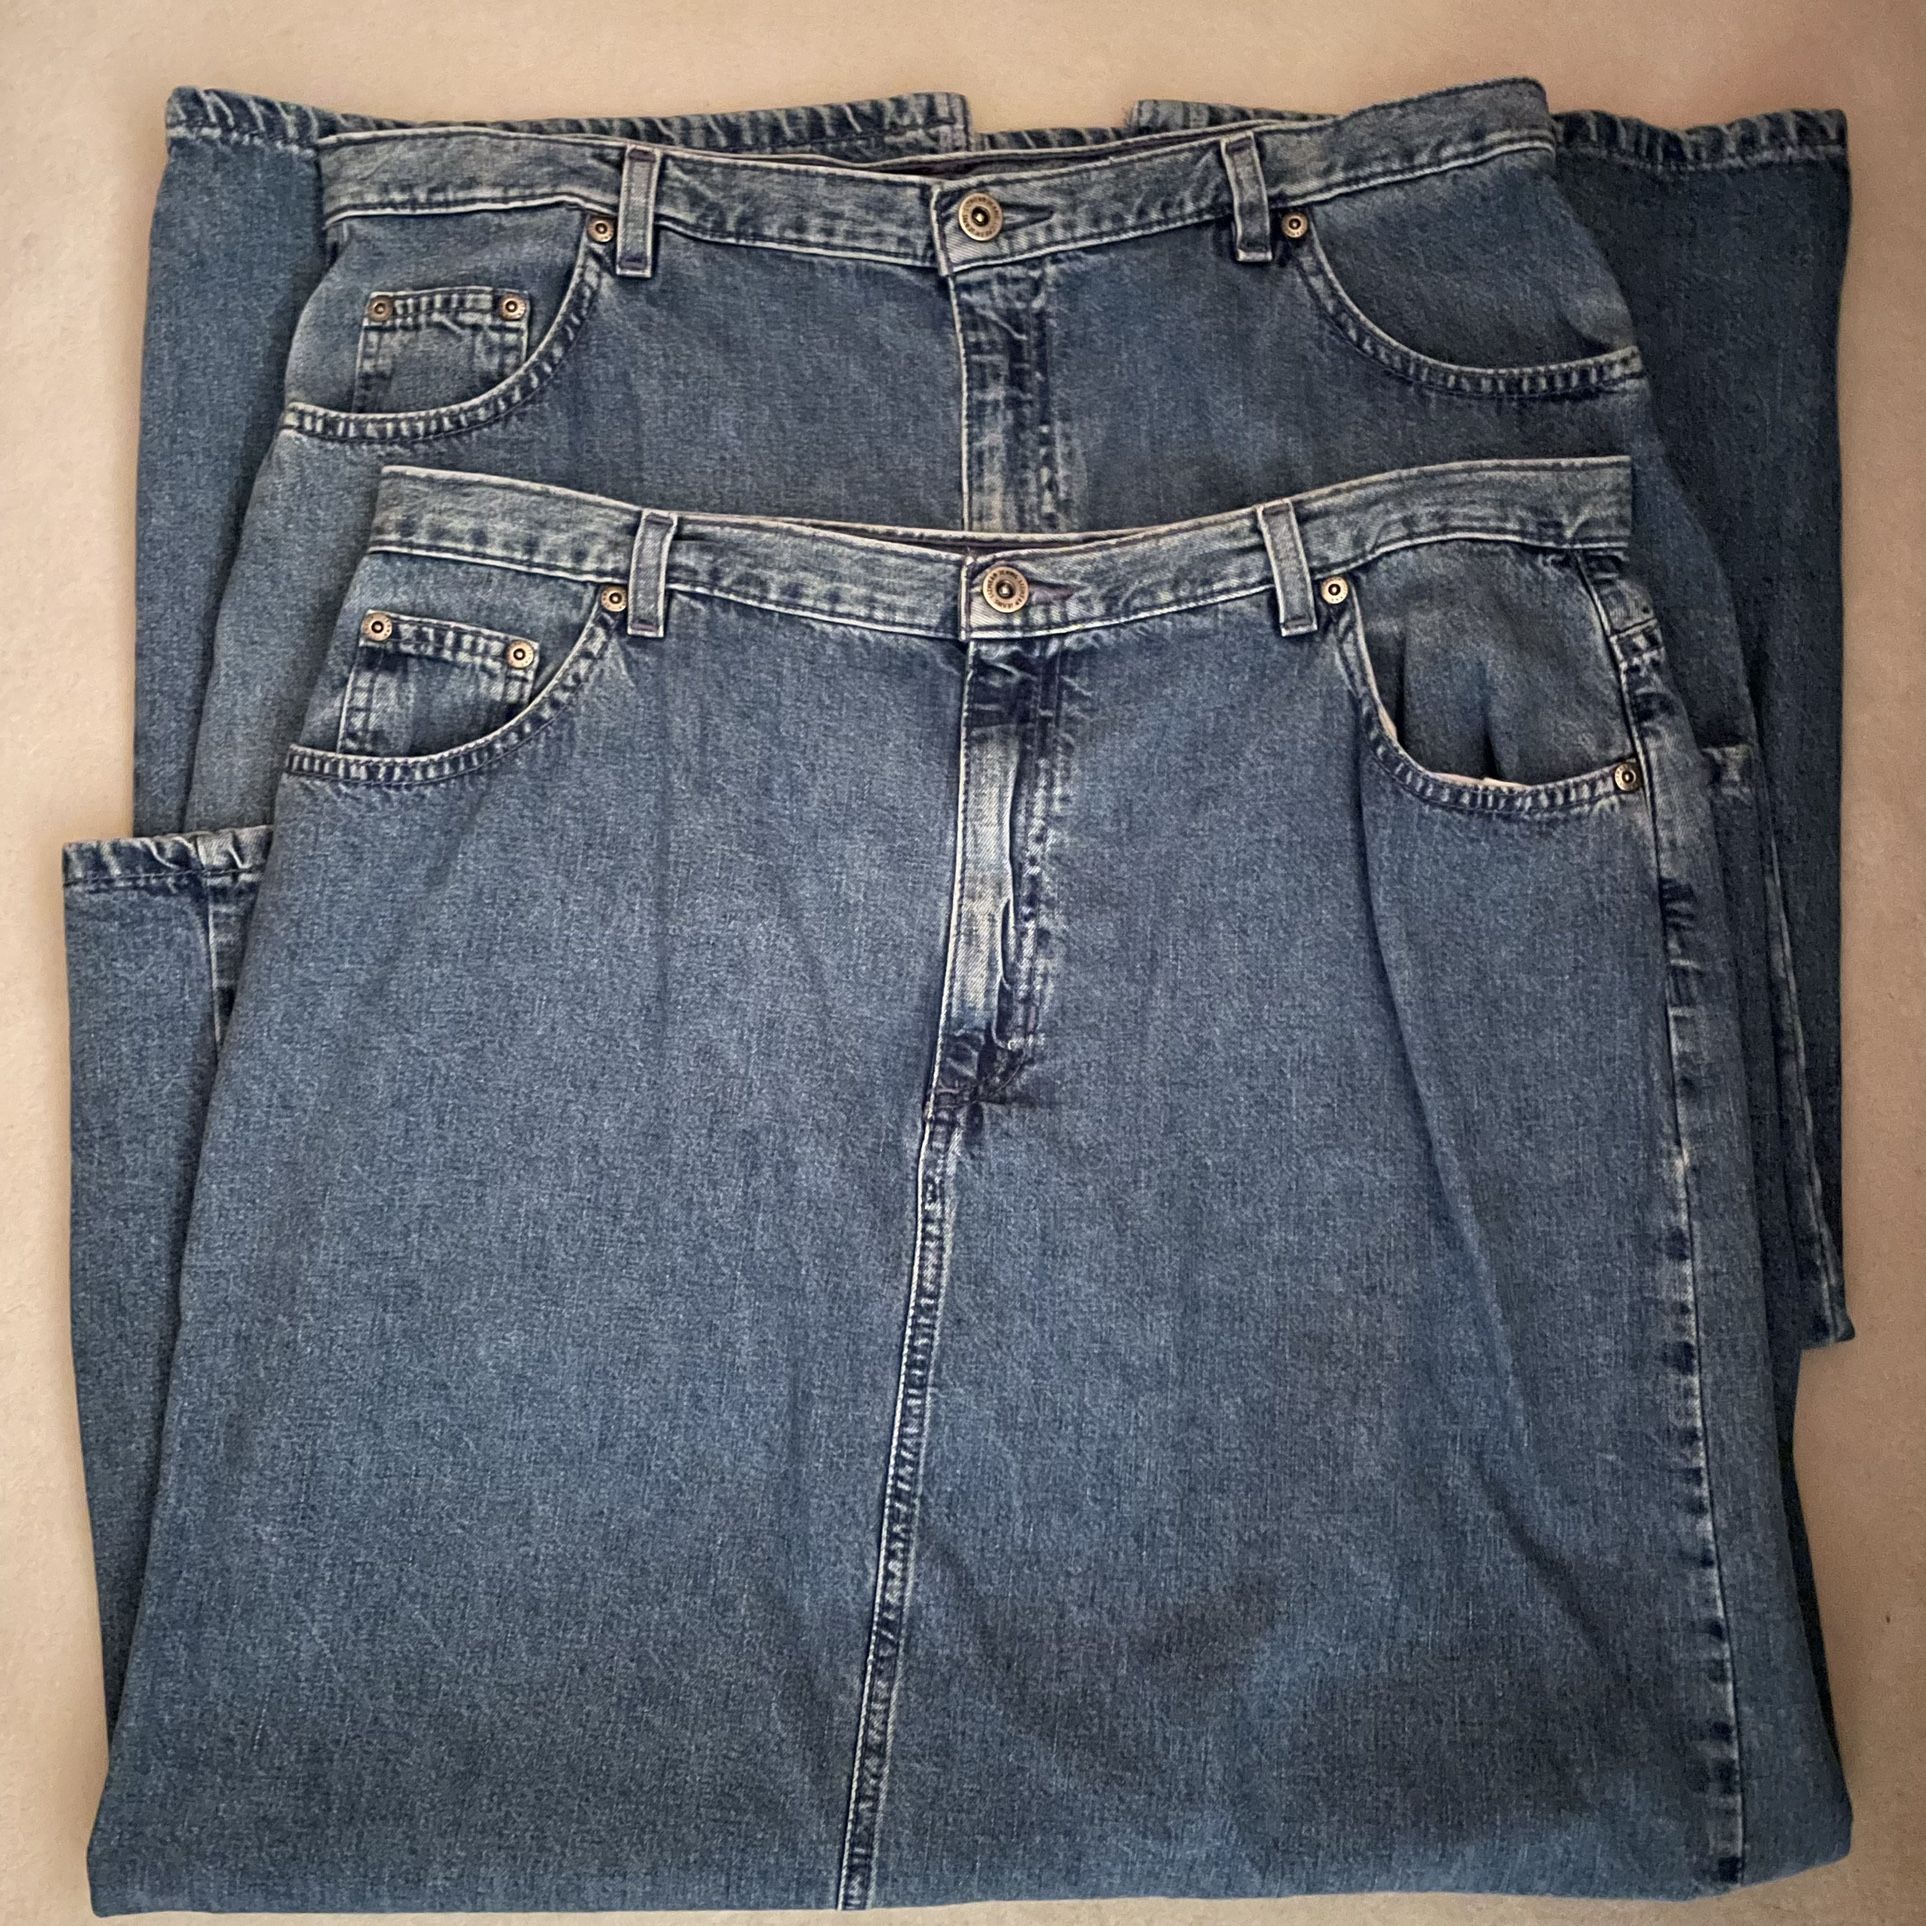 Set of 2 Liz Claiborne Maxi Jean Skirts, Size 16